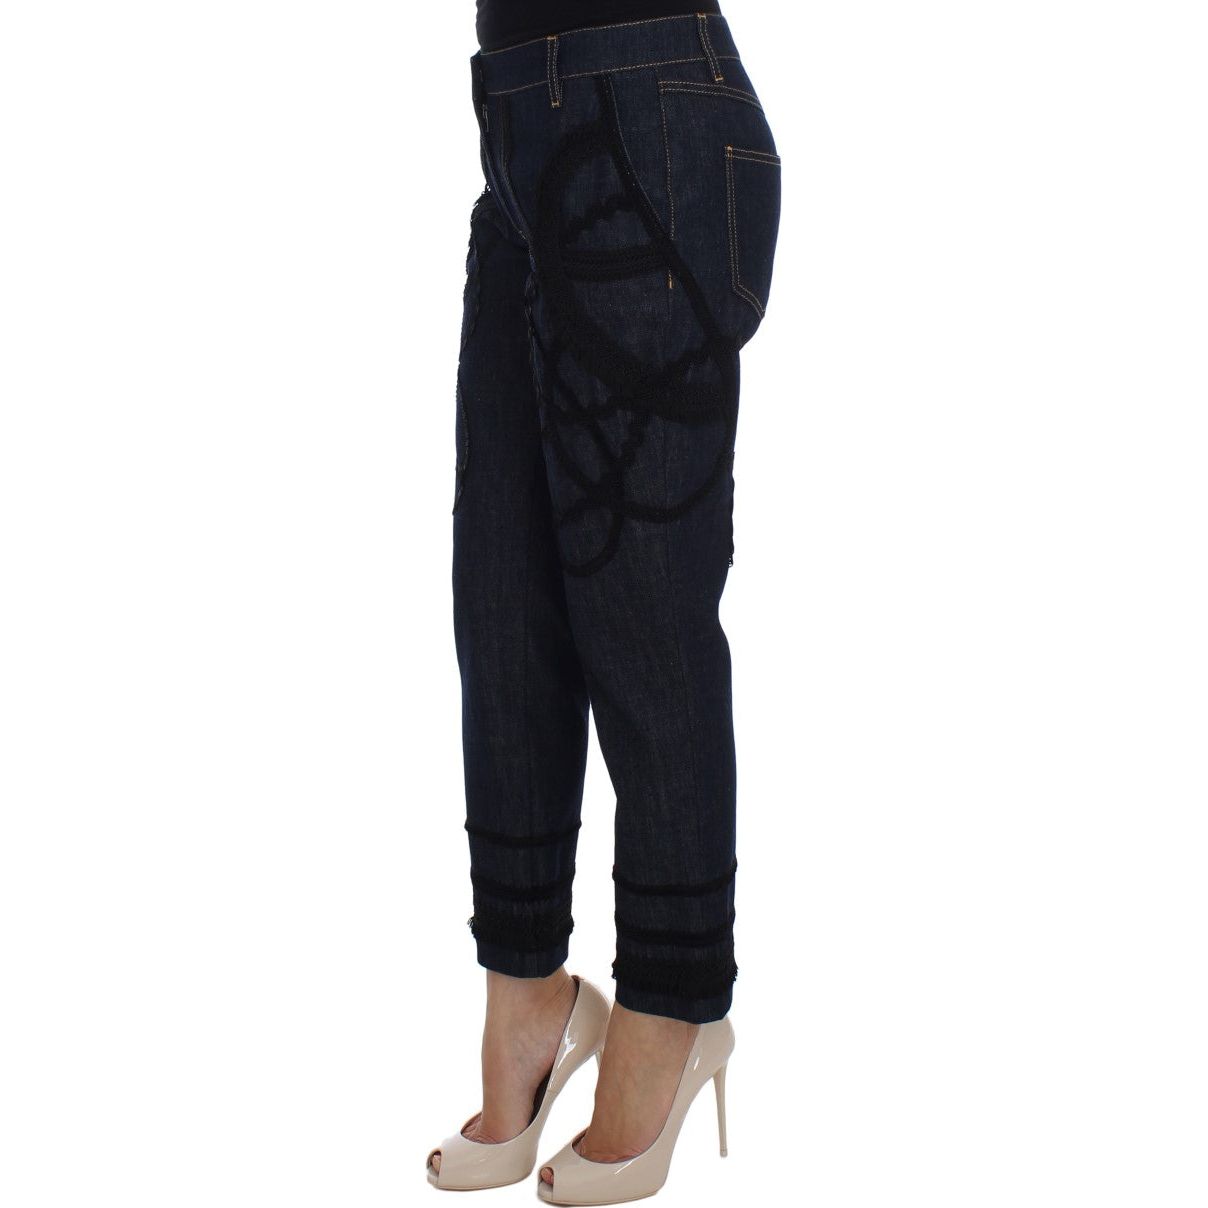 Dolce & Gabbana Embroidered Capri Jeans for Elegant Styling blue-denim-cotton-capri-torero-jeans 64487-blue-denim-cotton-capri-torero-jeans-1.jpg